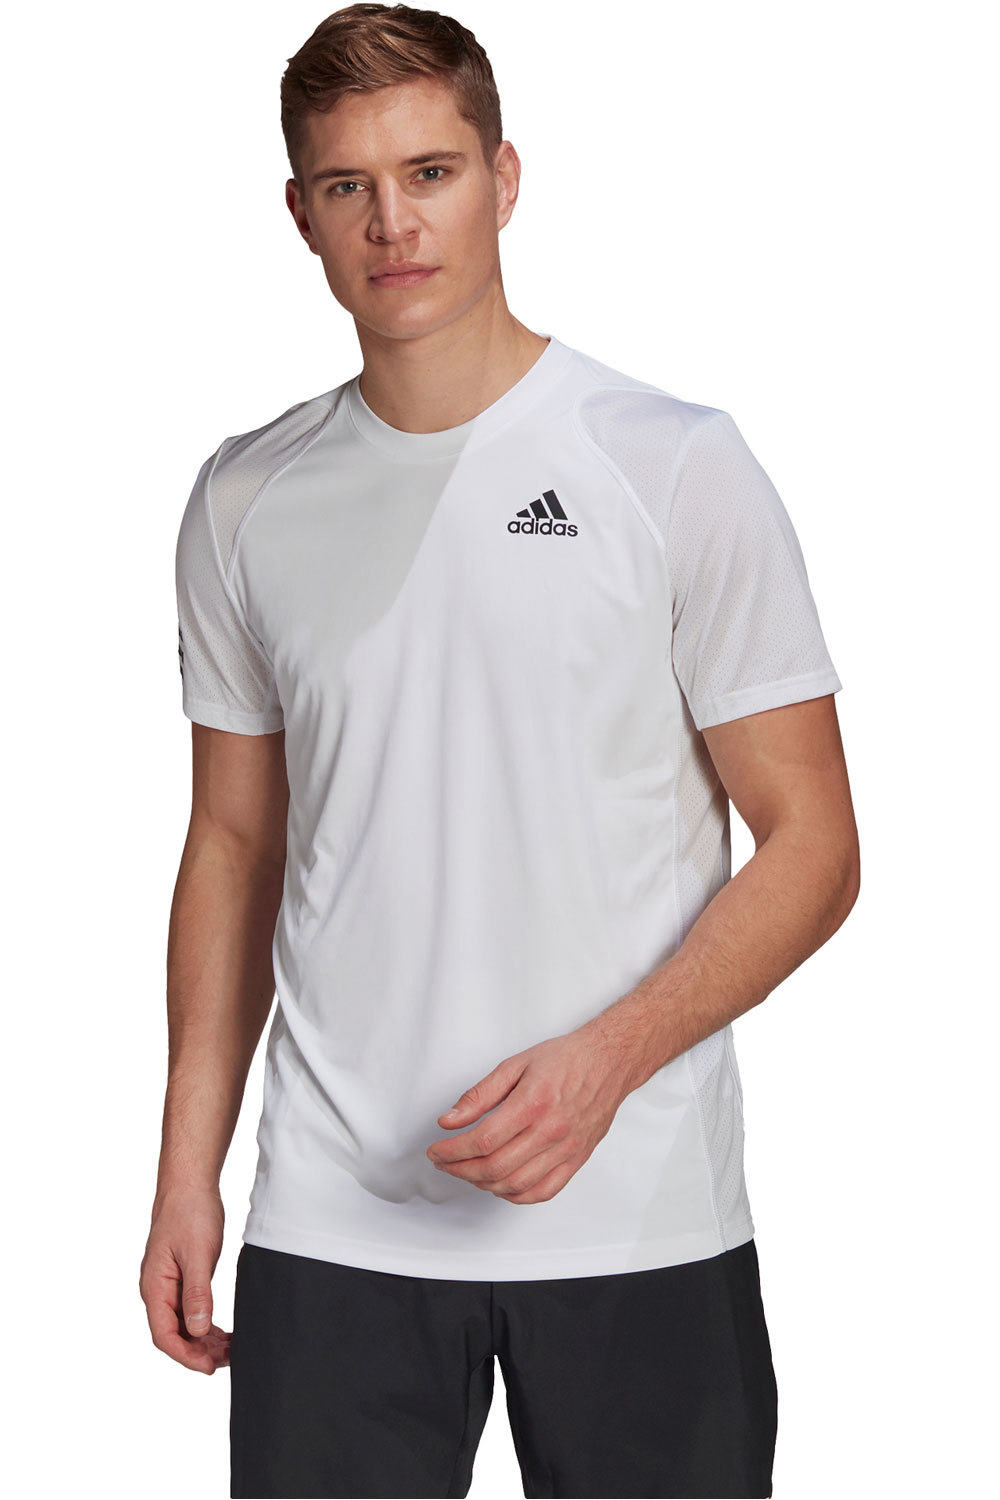 adidas camiseta tenis manga corta hombre Club Tennis 3 bandas vista frontal